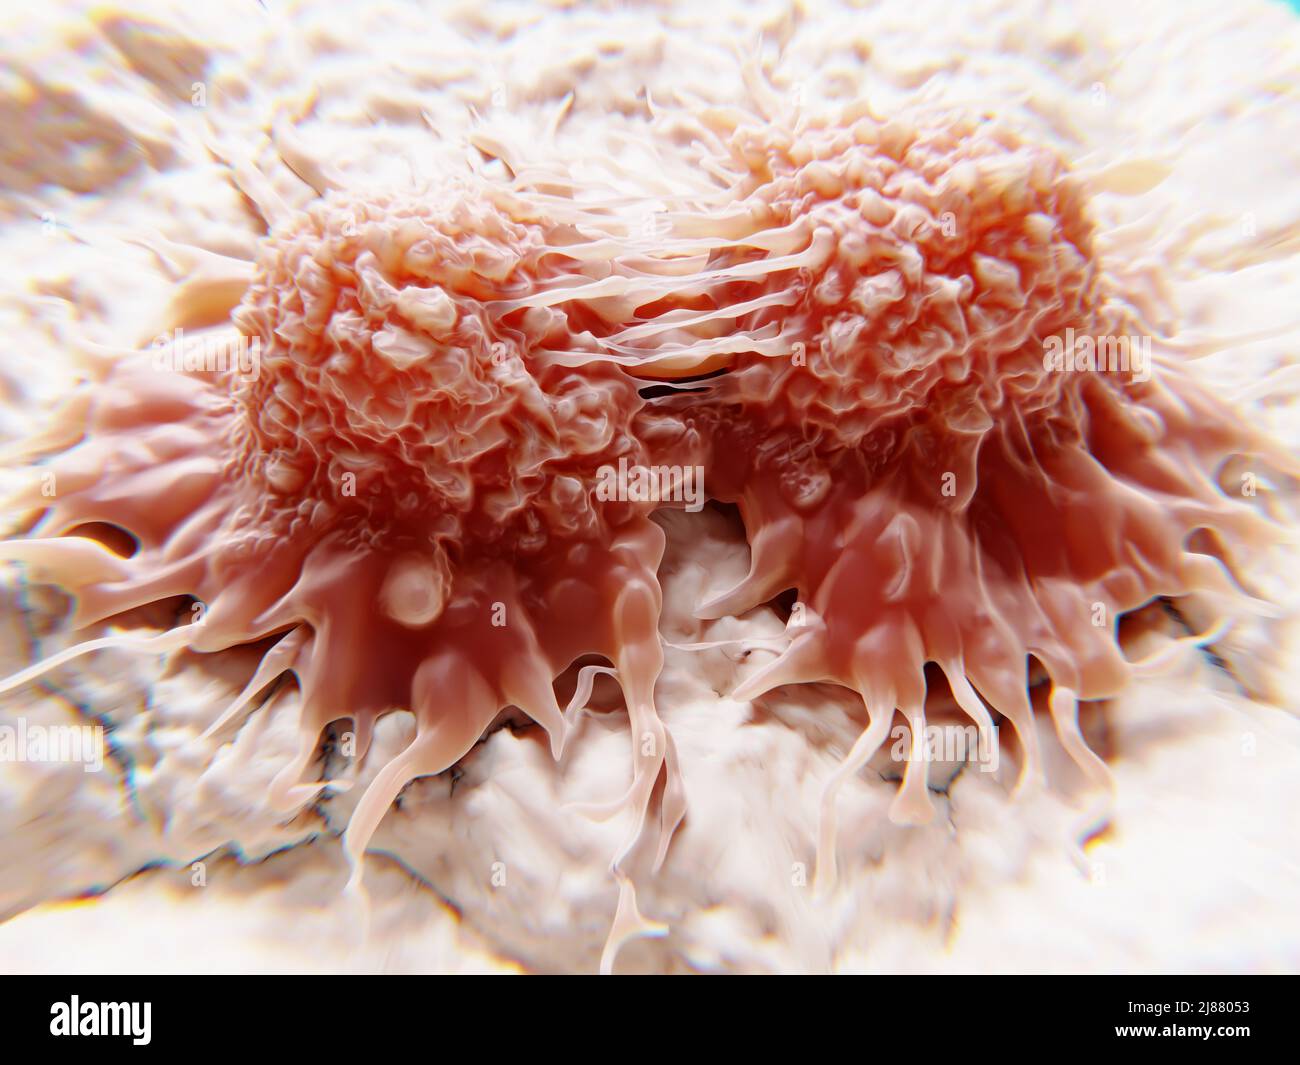 Dividing cancer cells, illustration Stock Photo